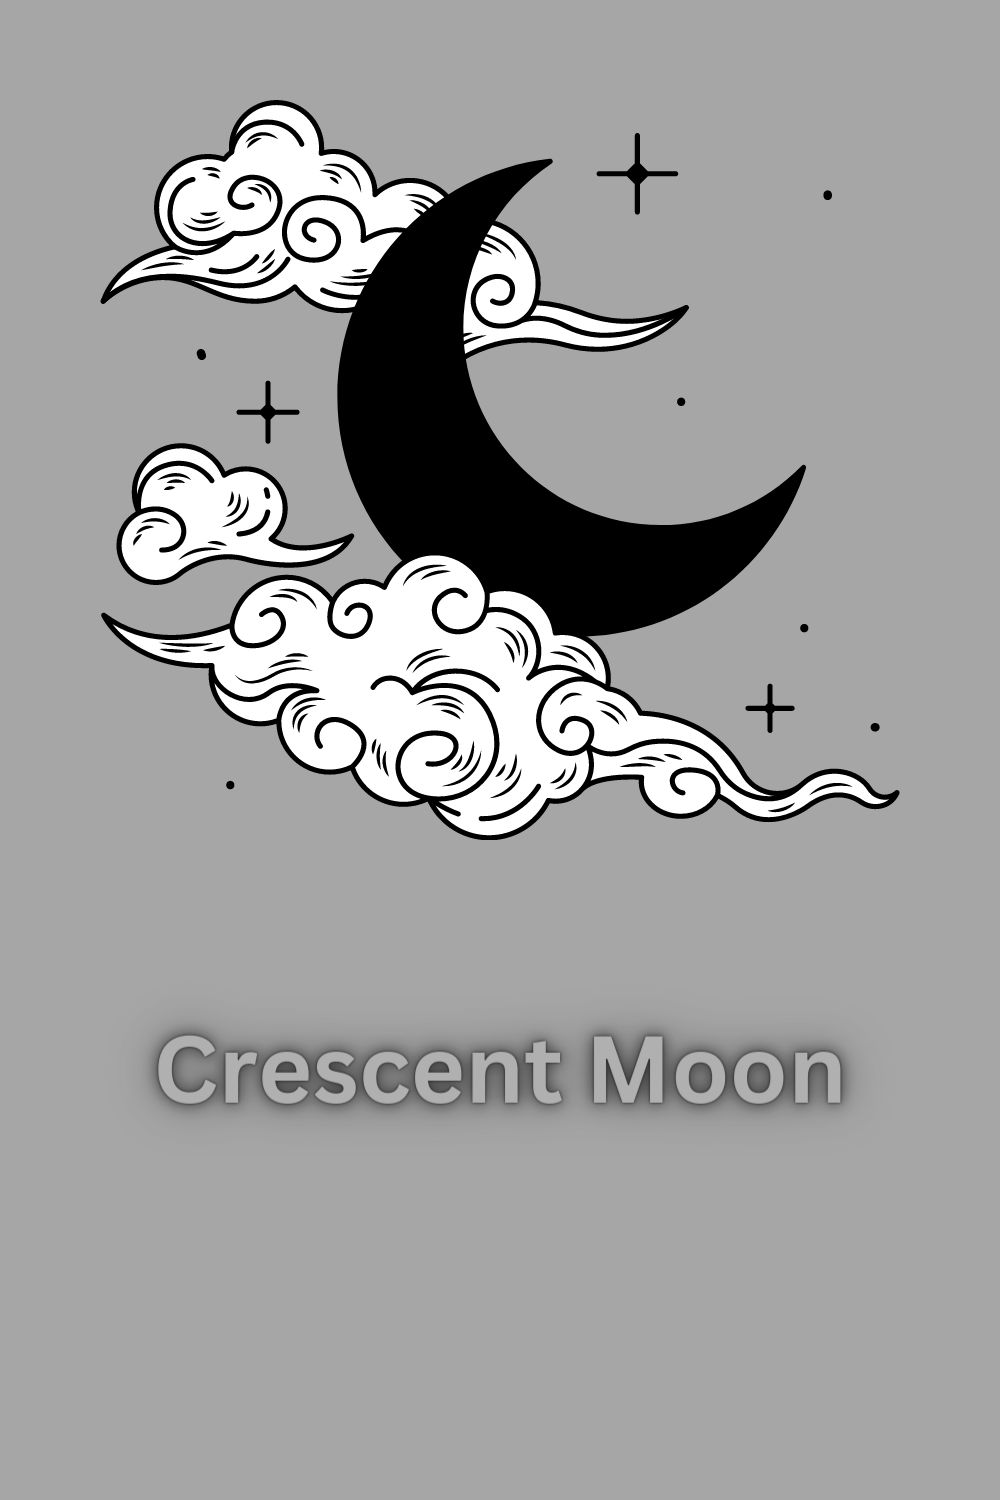 Crescent Moon PNG Design pinterest image.